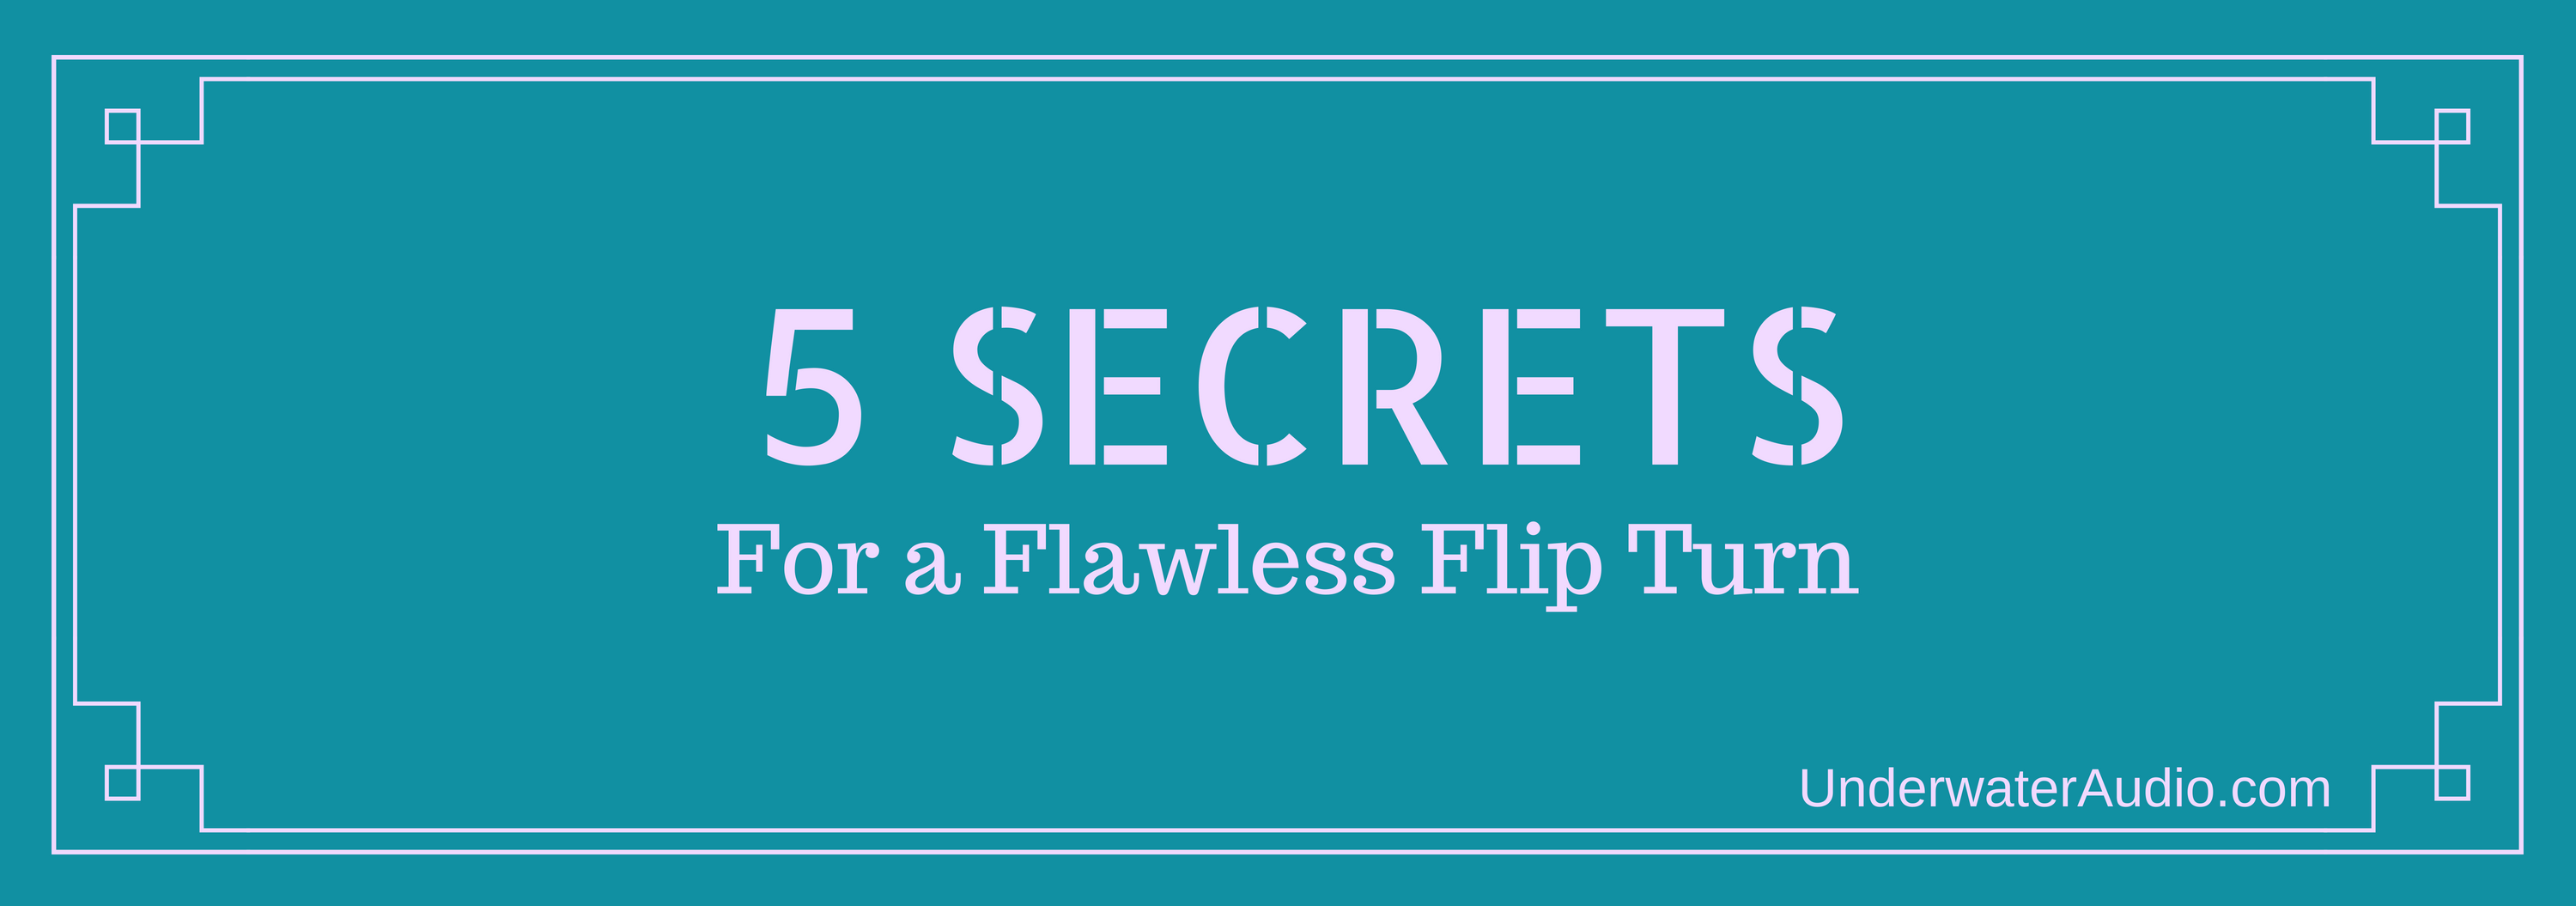 5 Secrets for a Flawless Flip Turn